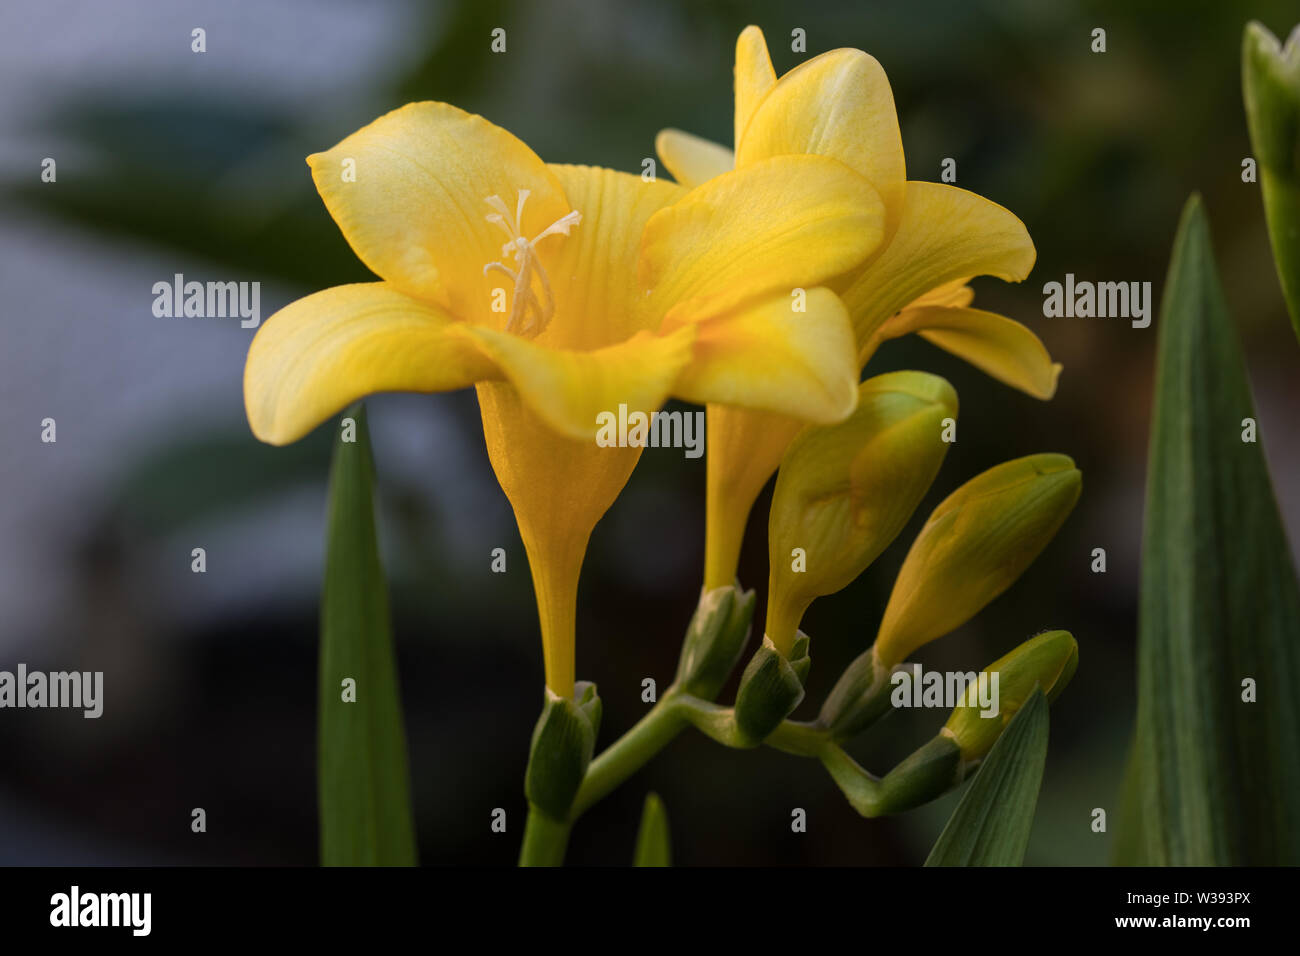 Close-up of yellow freesia flowers. Dark green background, natural light. Stock Photo